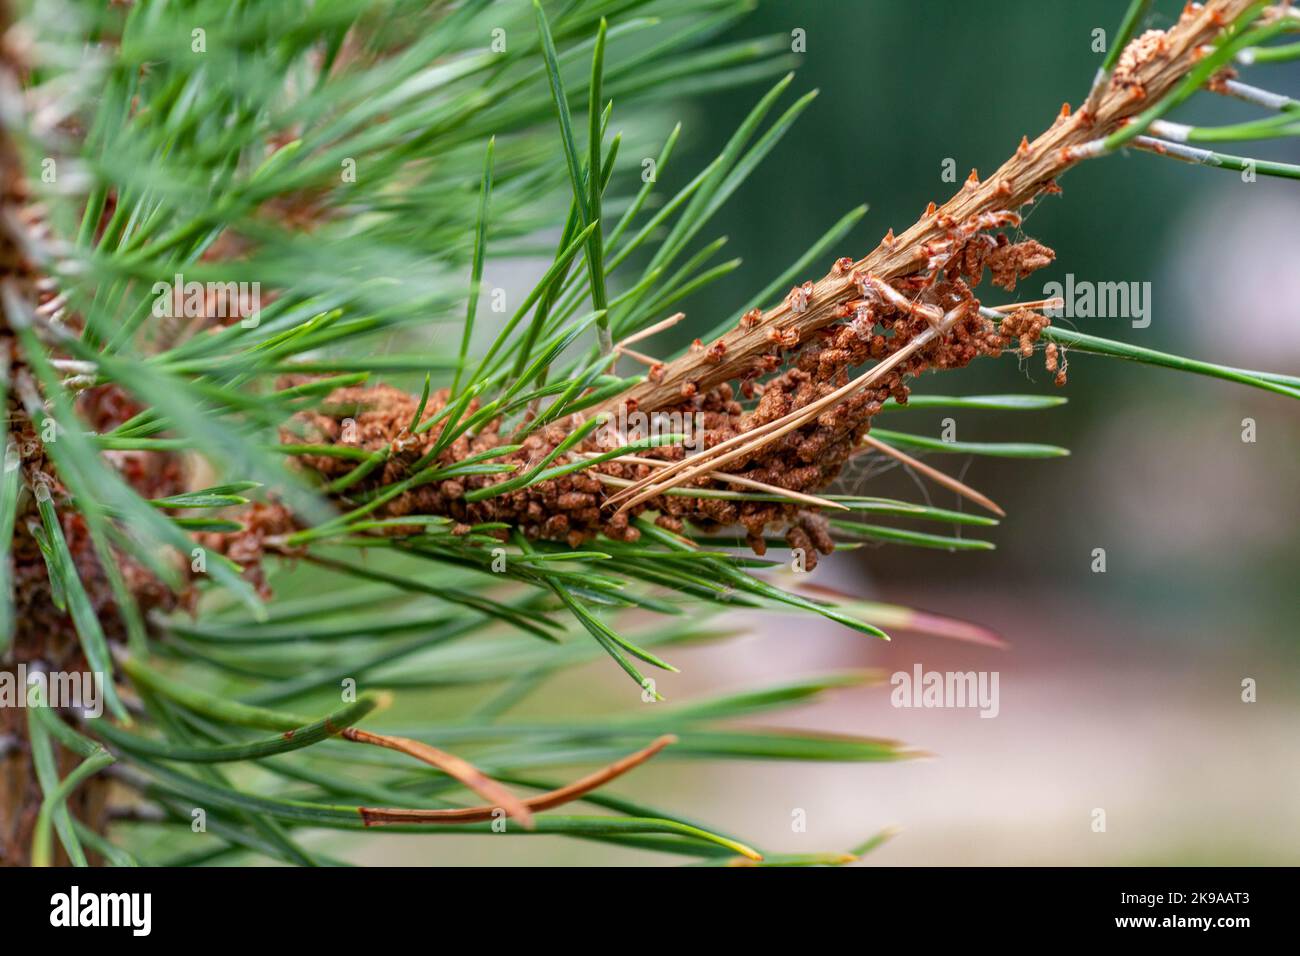 Pine Tree Diseases  How to Identify Pine Tree Diseases